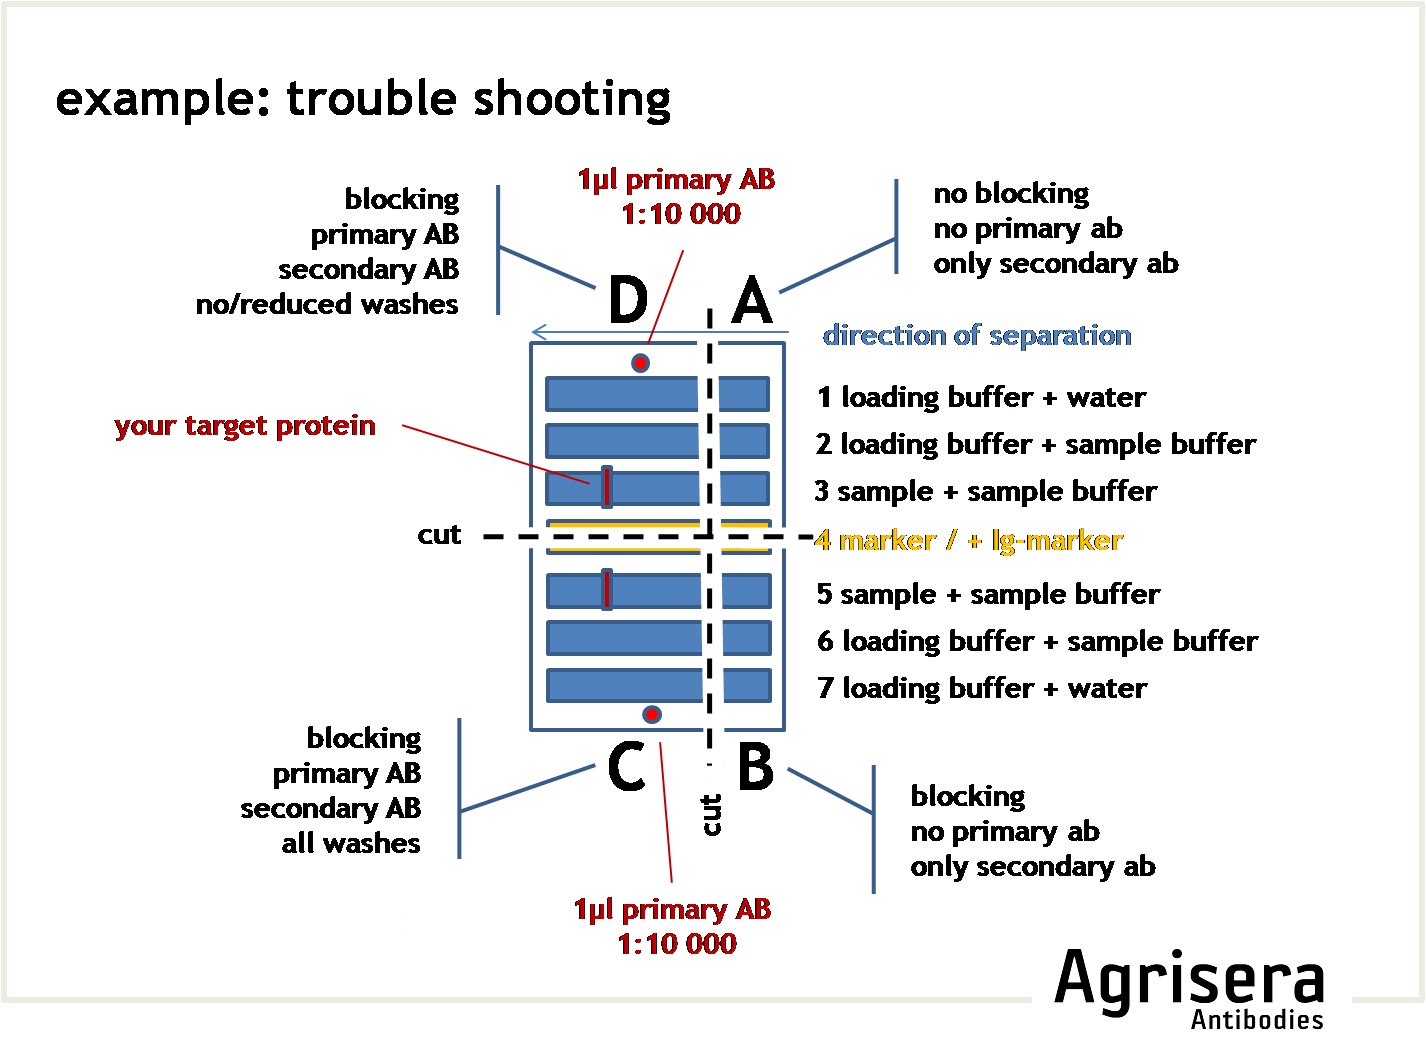 western blot trouble shooting scheme